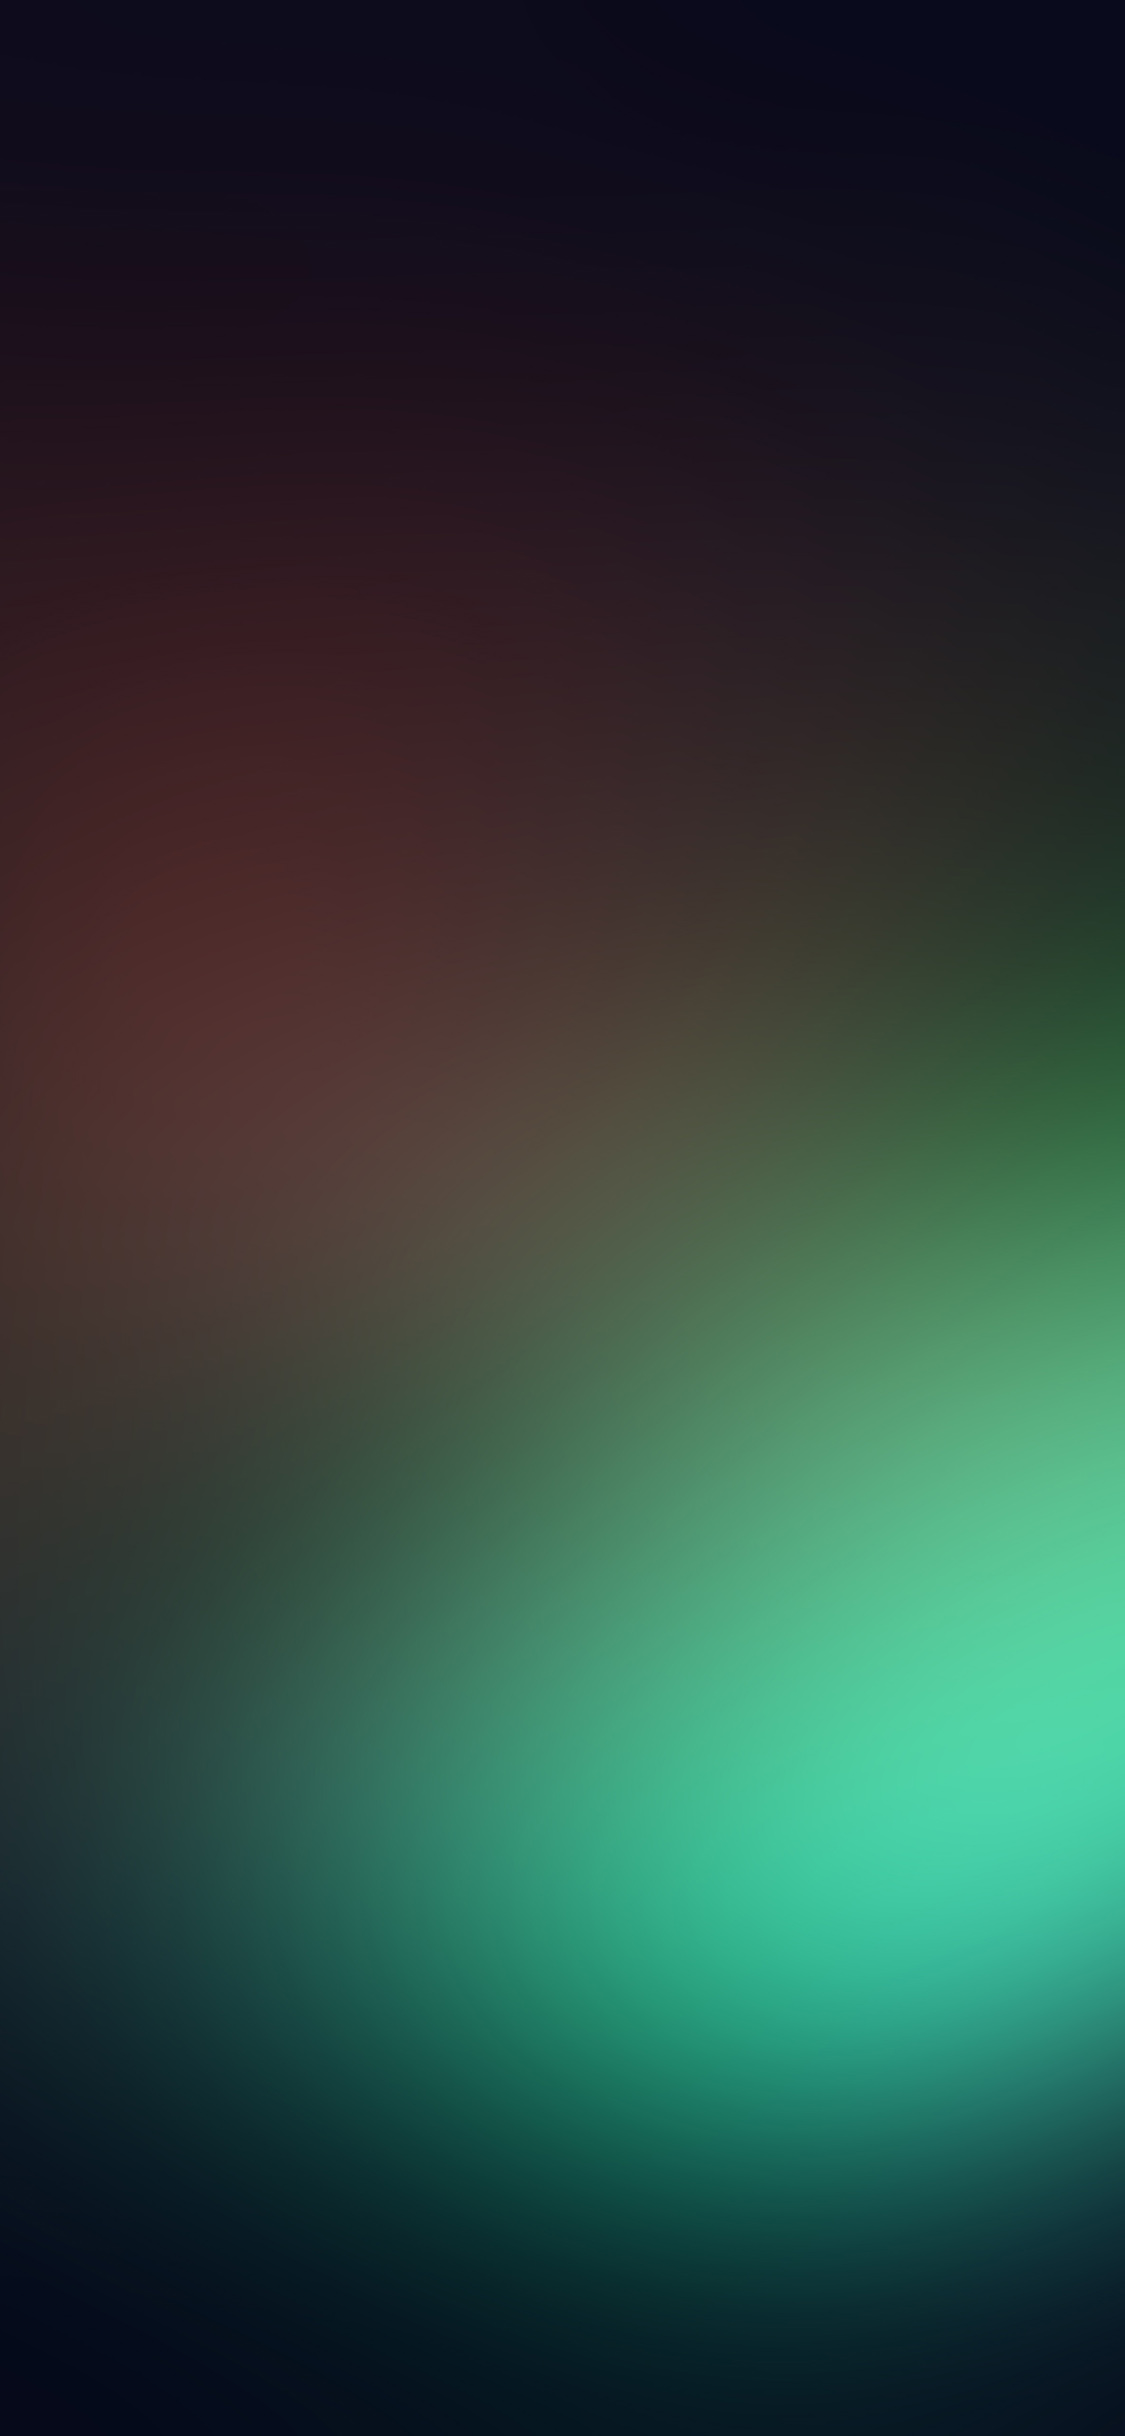 iPhone X wallpaper. green red fight hana comeback gradation blur